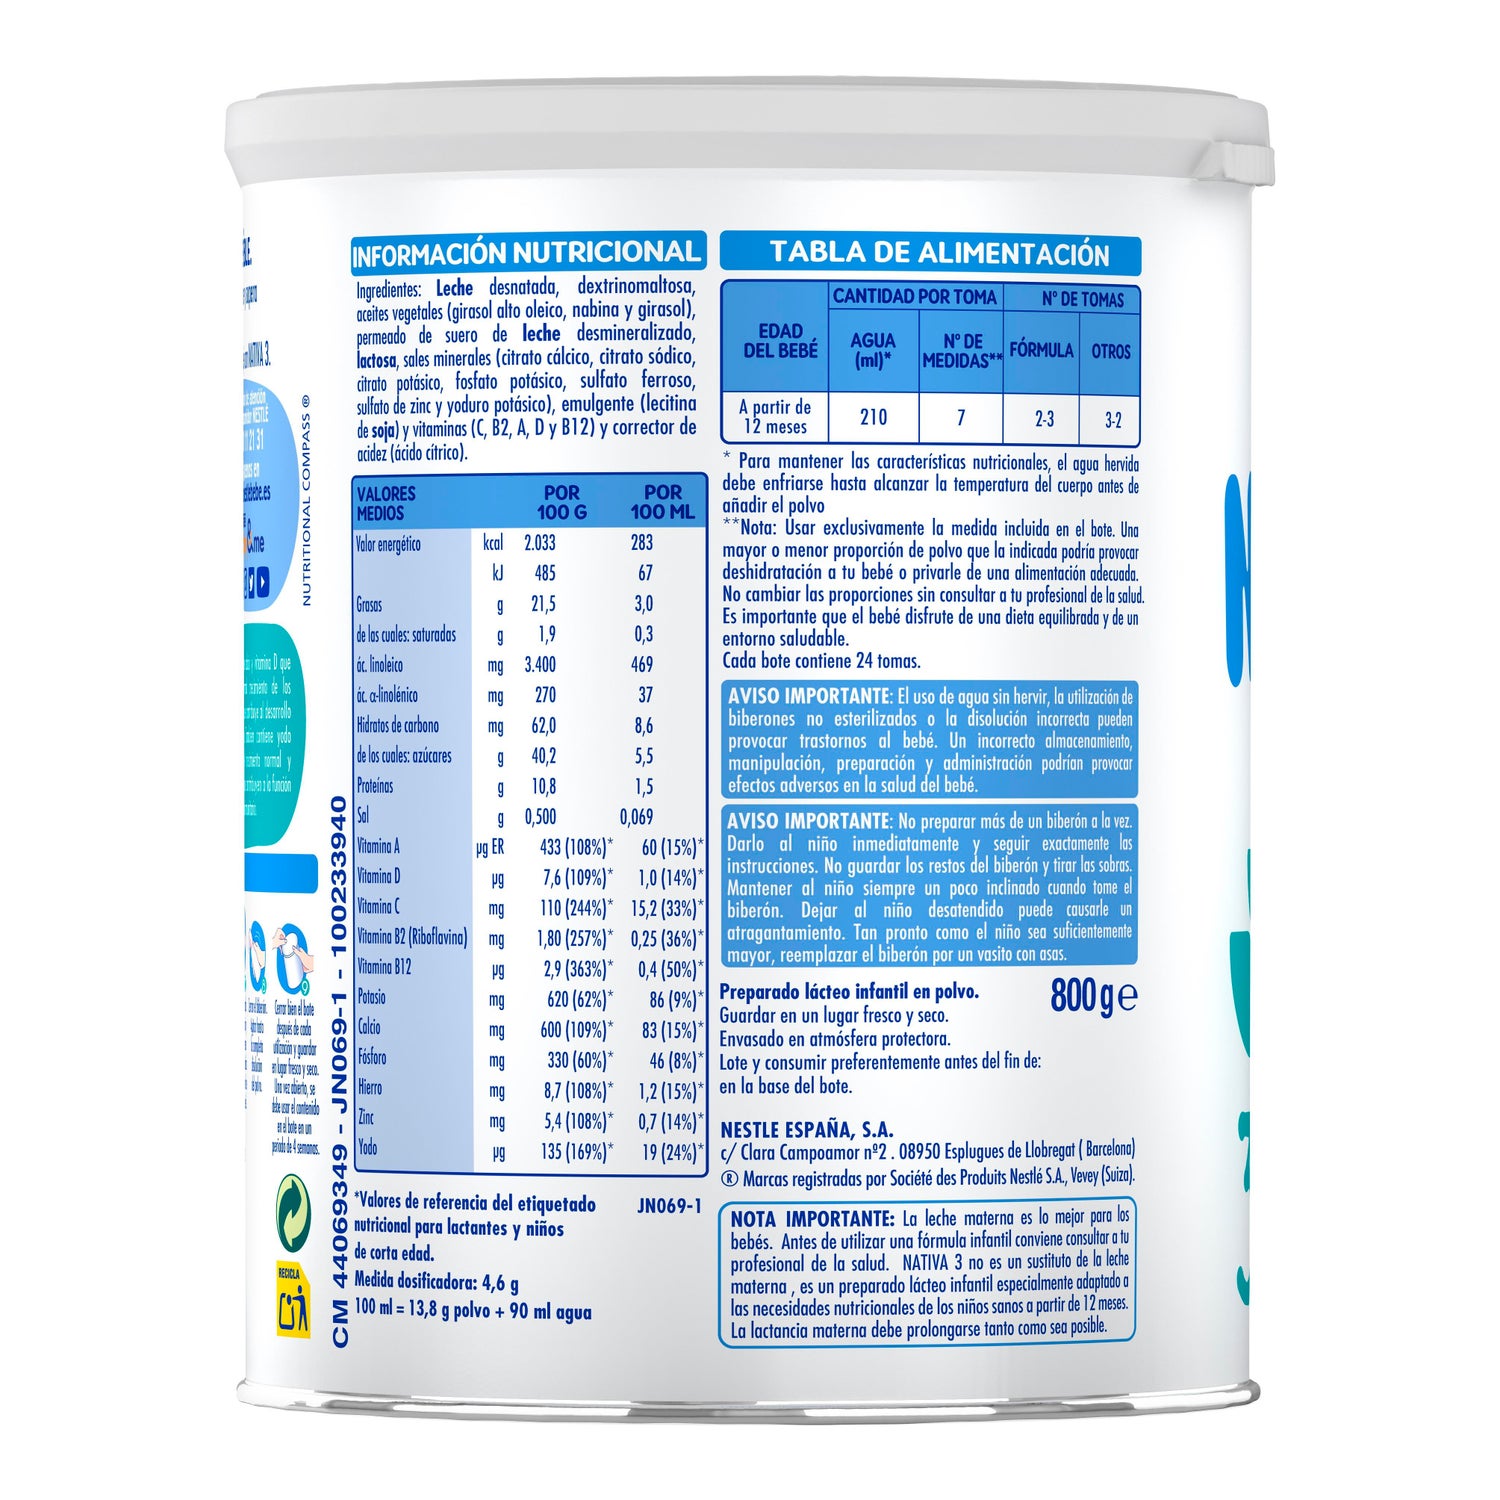 Leche en polvo para lactantes Nativa 1 Nestlé : Opiniones